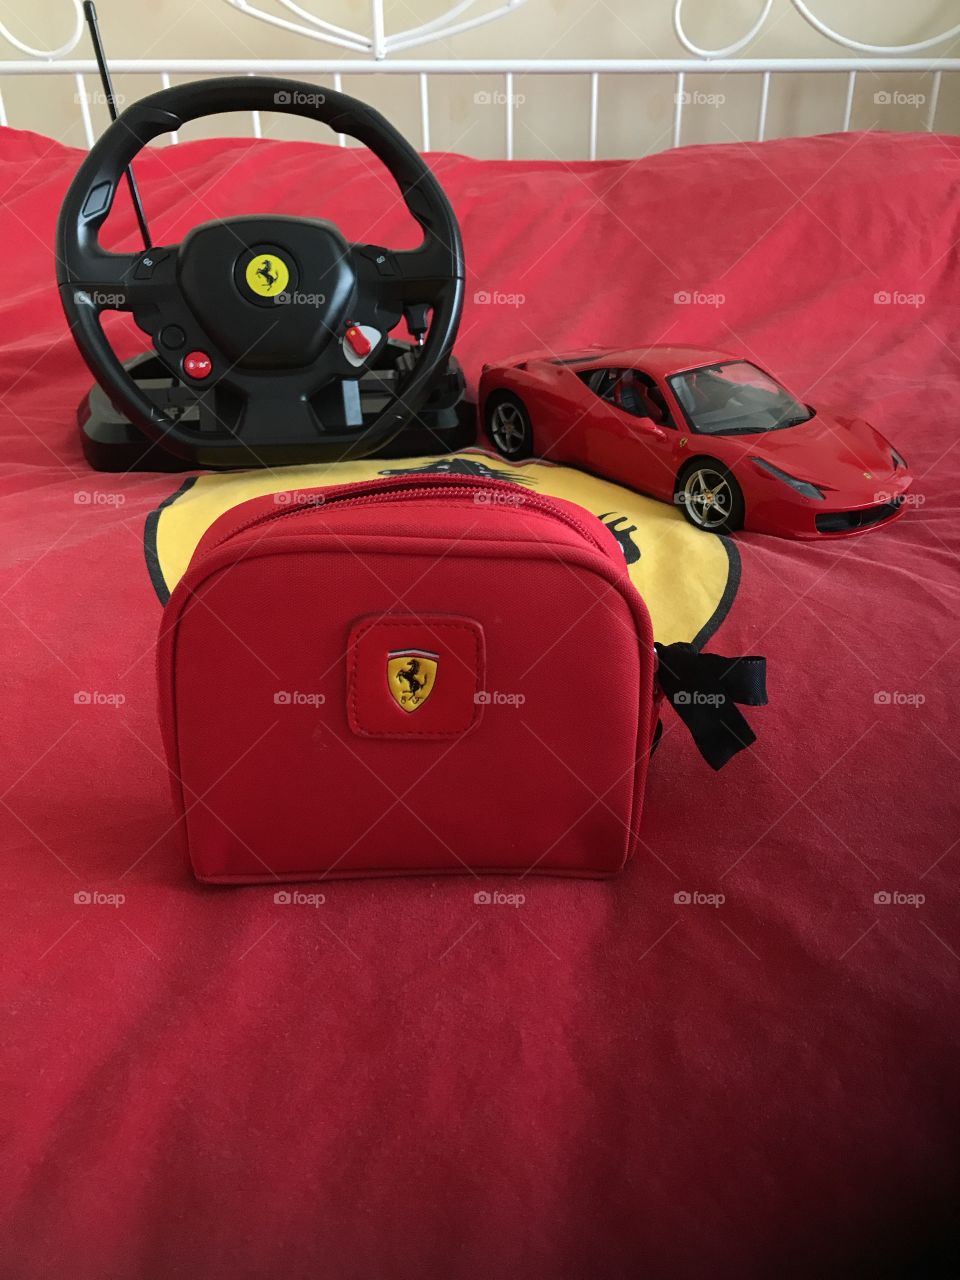 Ferrari toy and stuff 